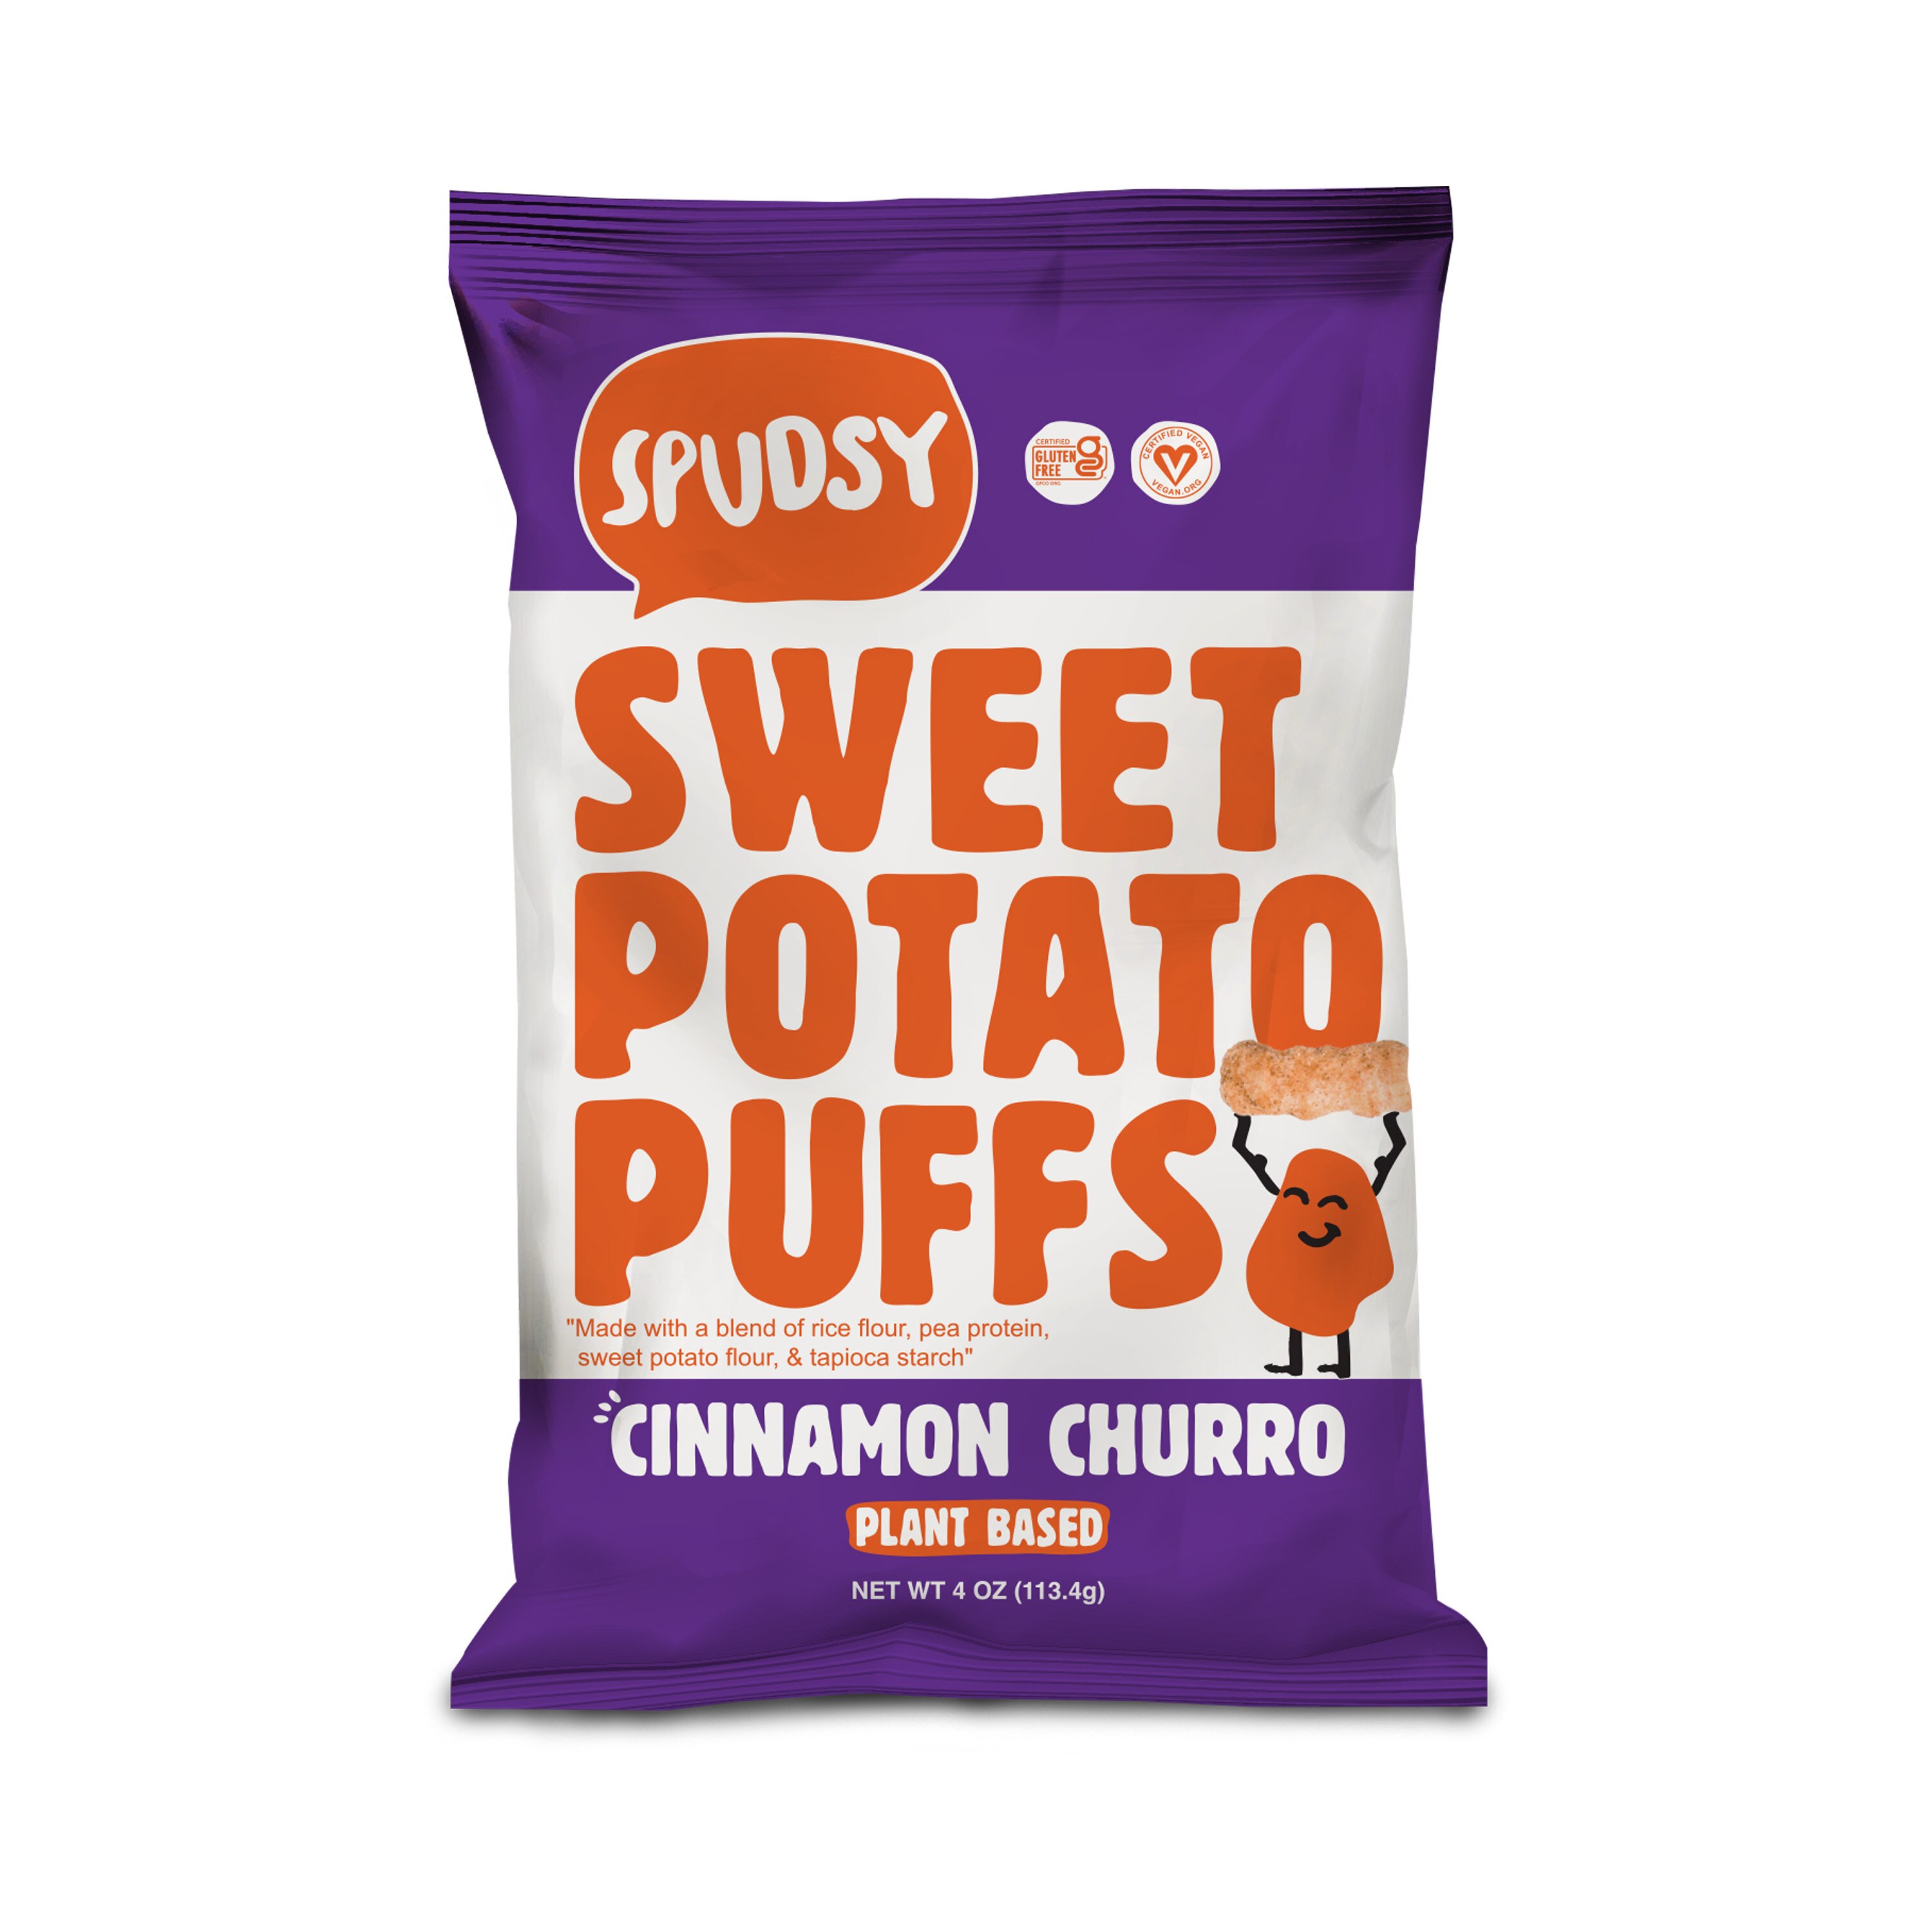 Spudsy Cinnamon Churro Sweet Potato Puffs, 4 OZ